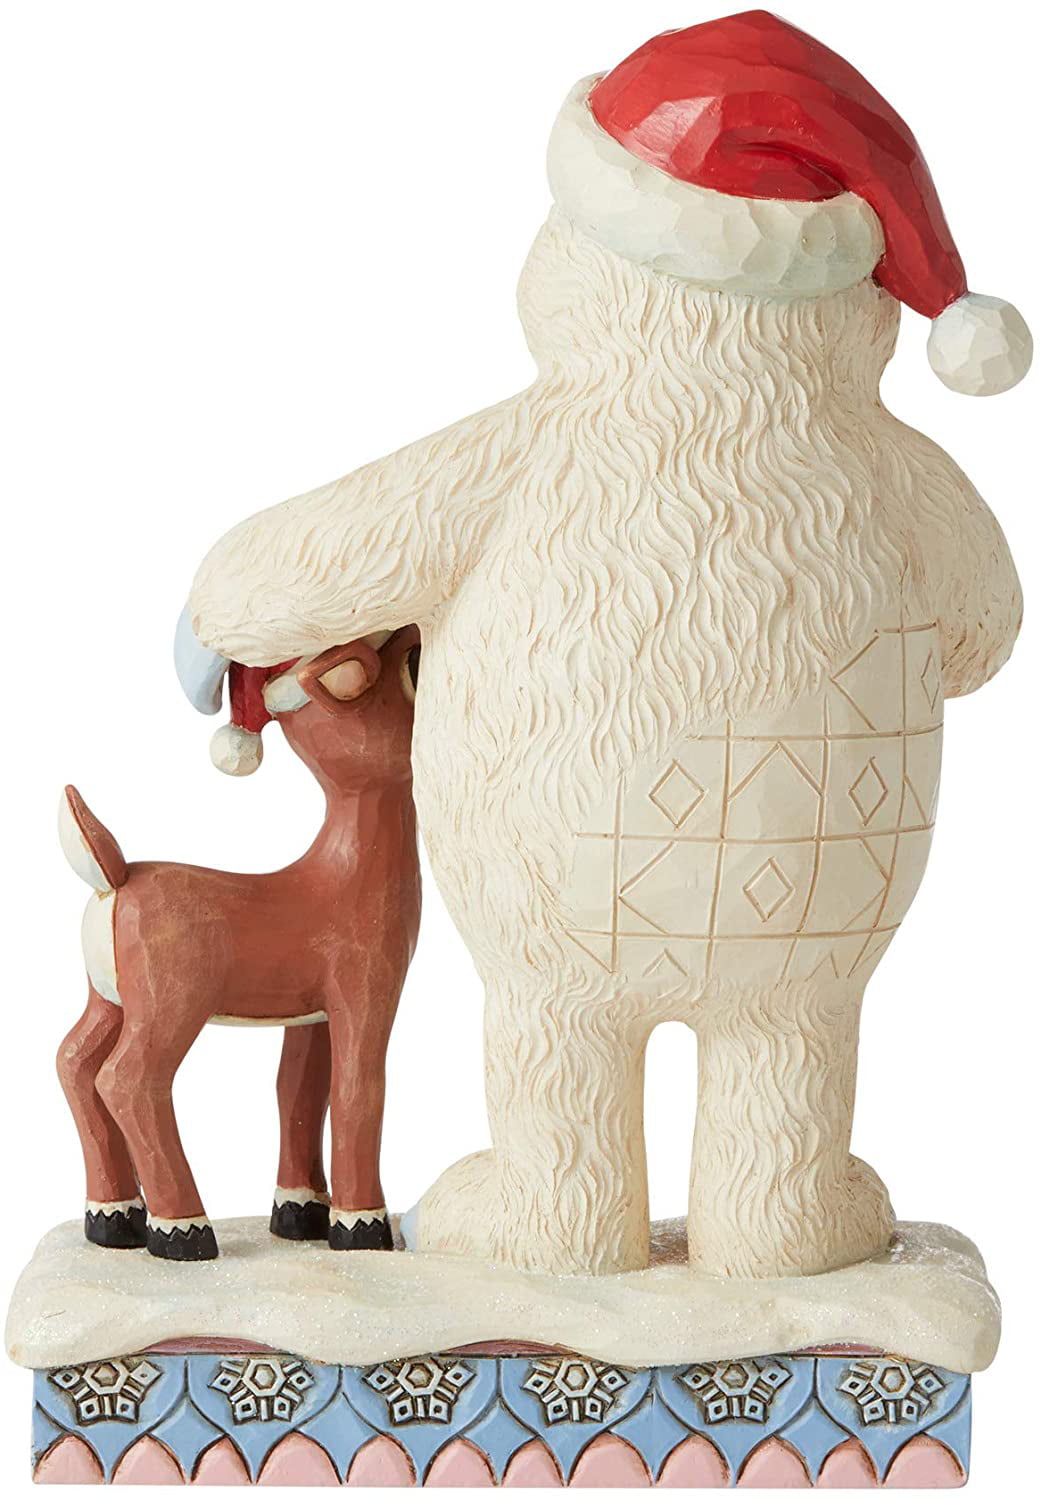 Enesco Jim Shore Rudolph with Bumble Christmas Figurine 6006791 